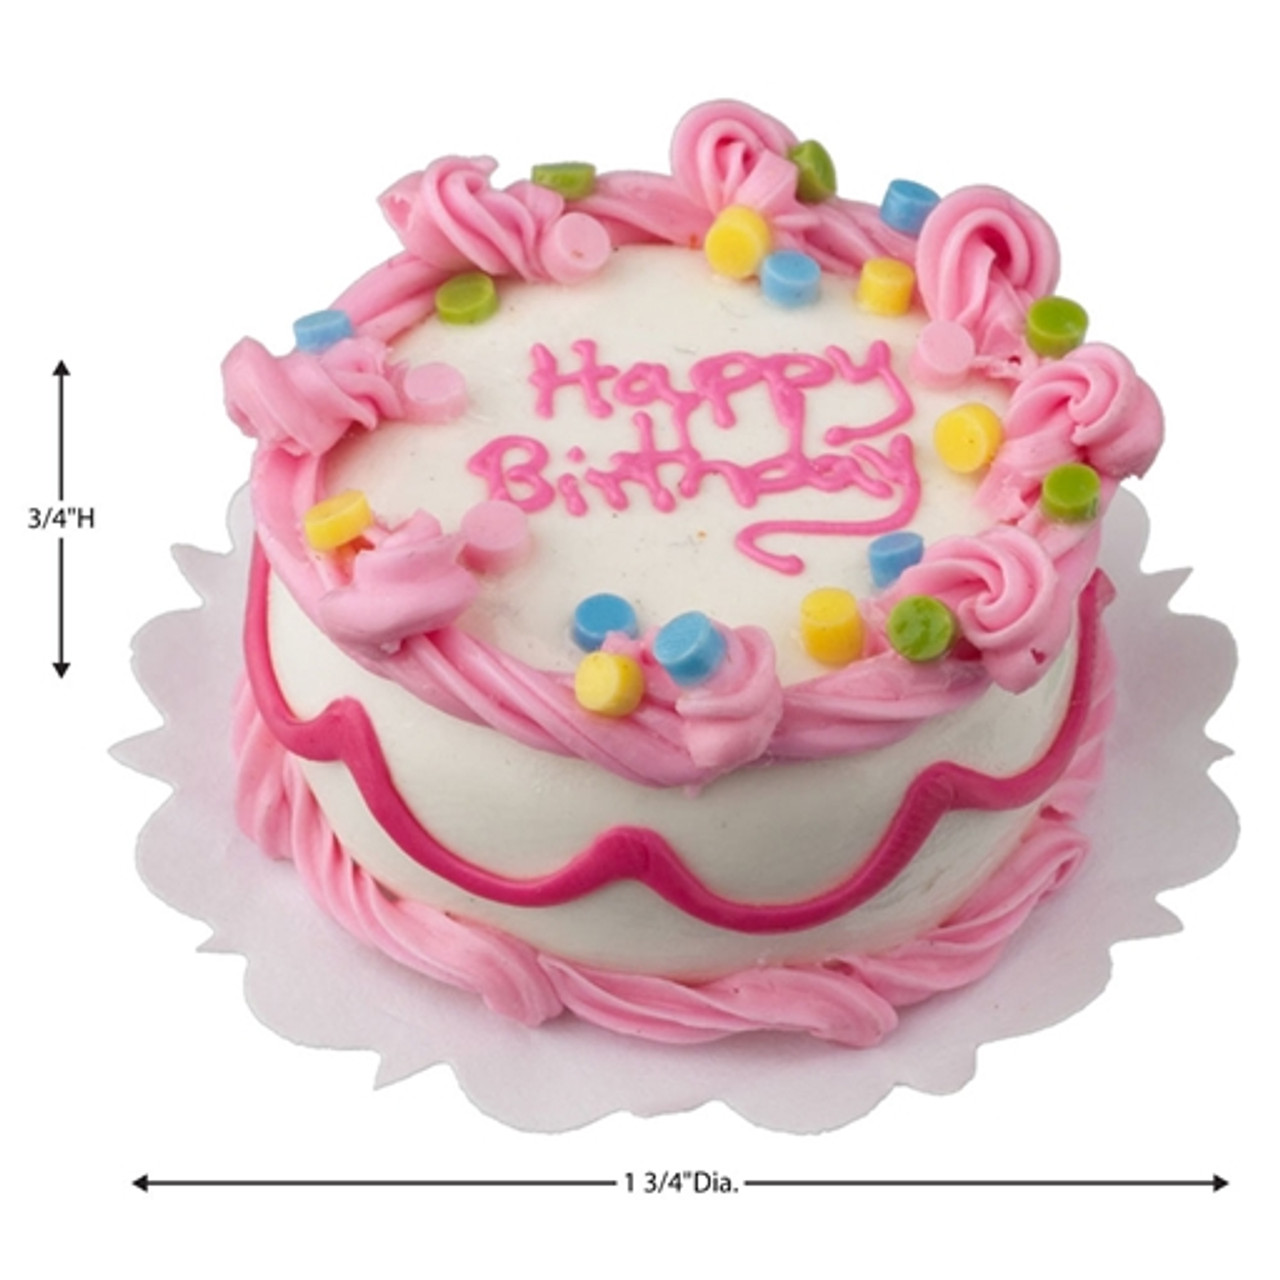 The Birthday Cakes – Witaworld